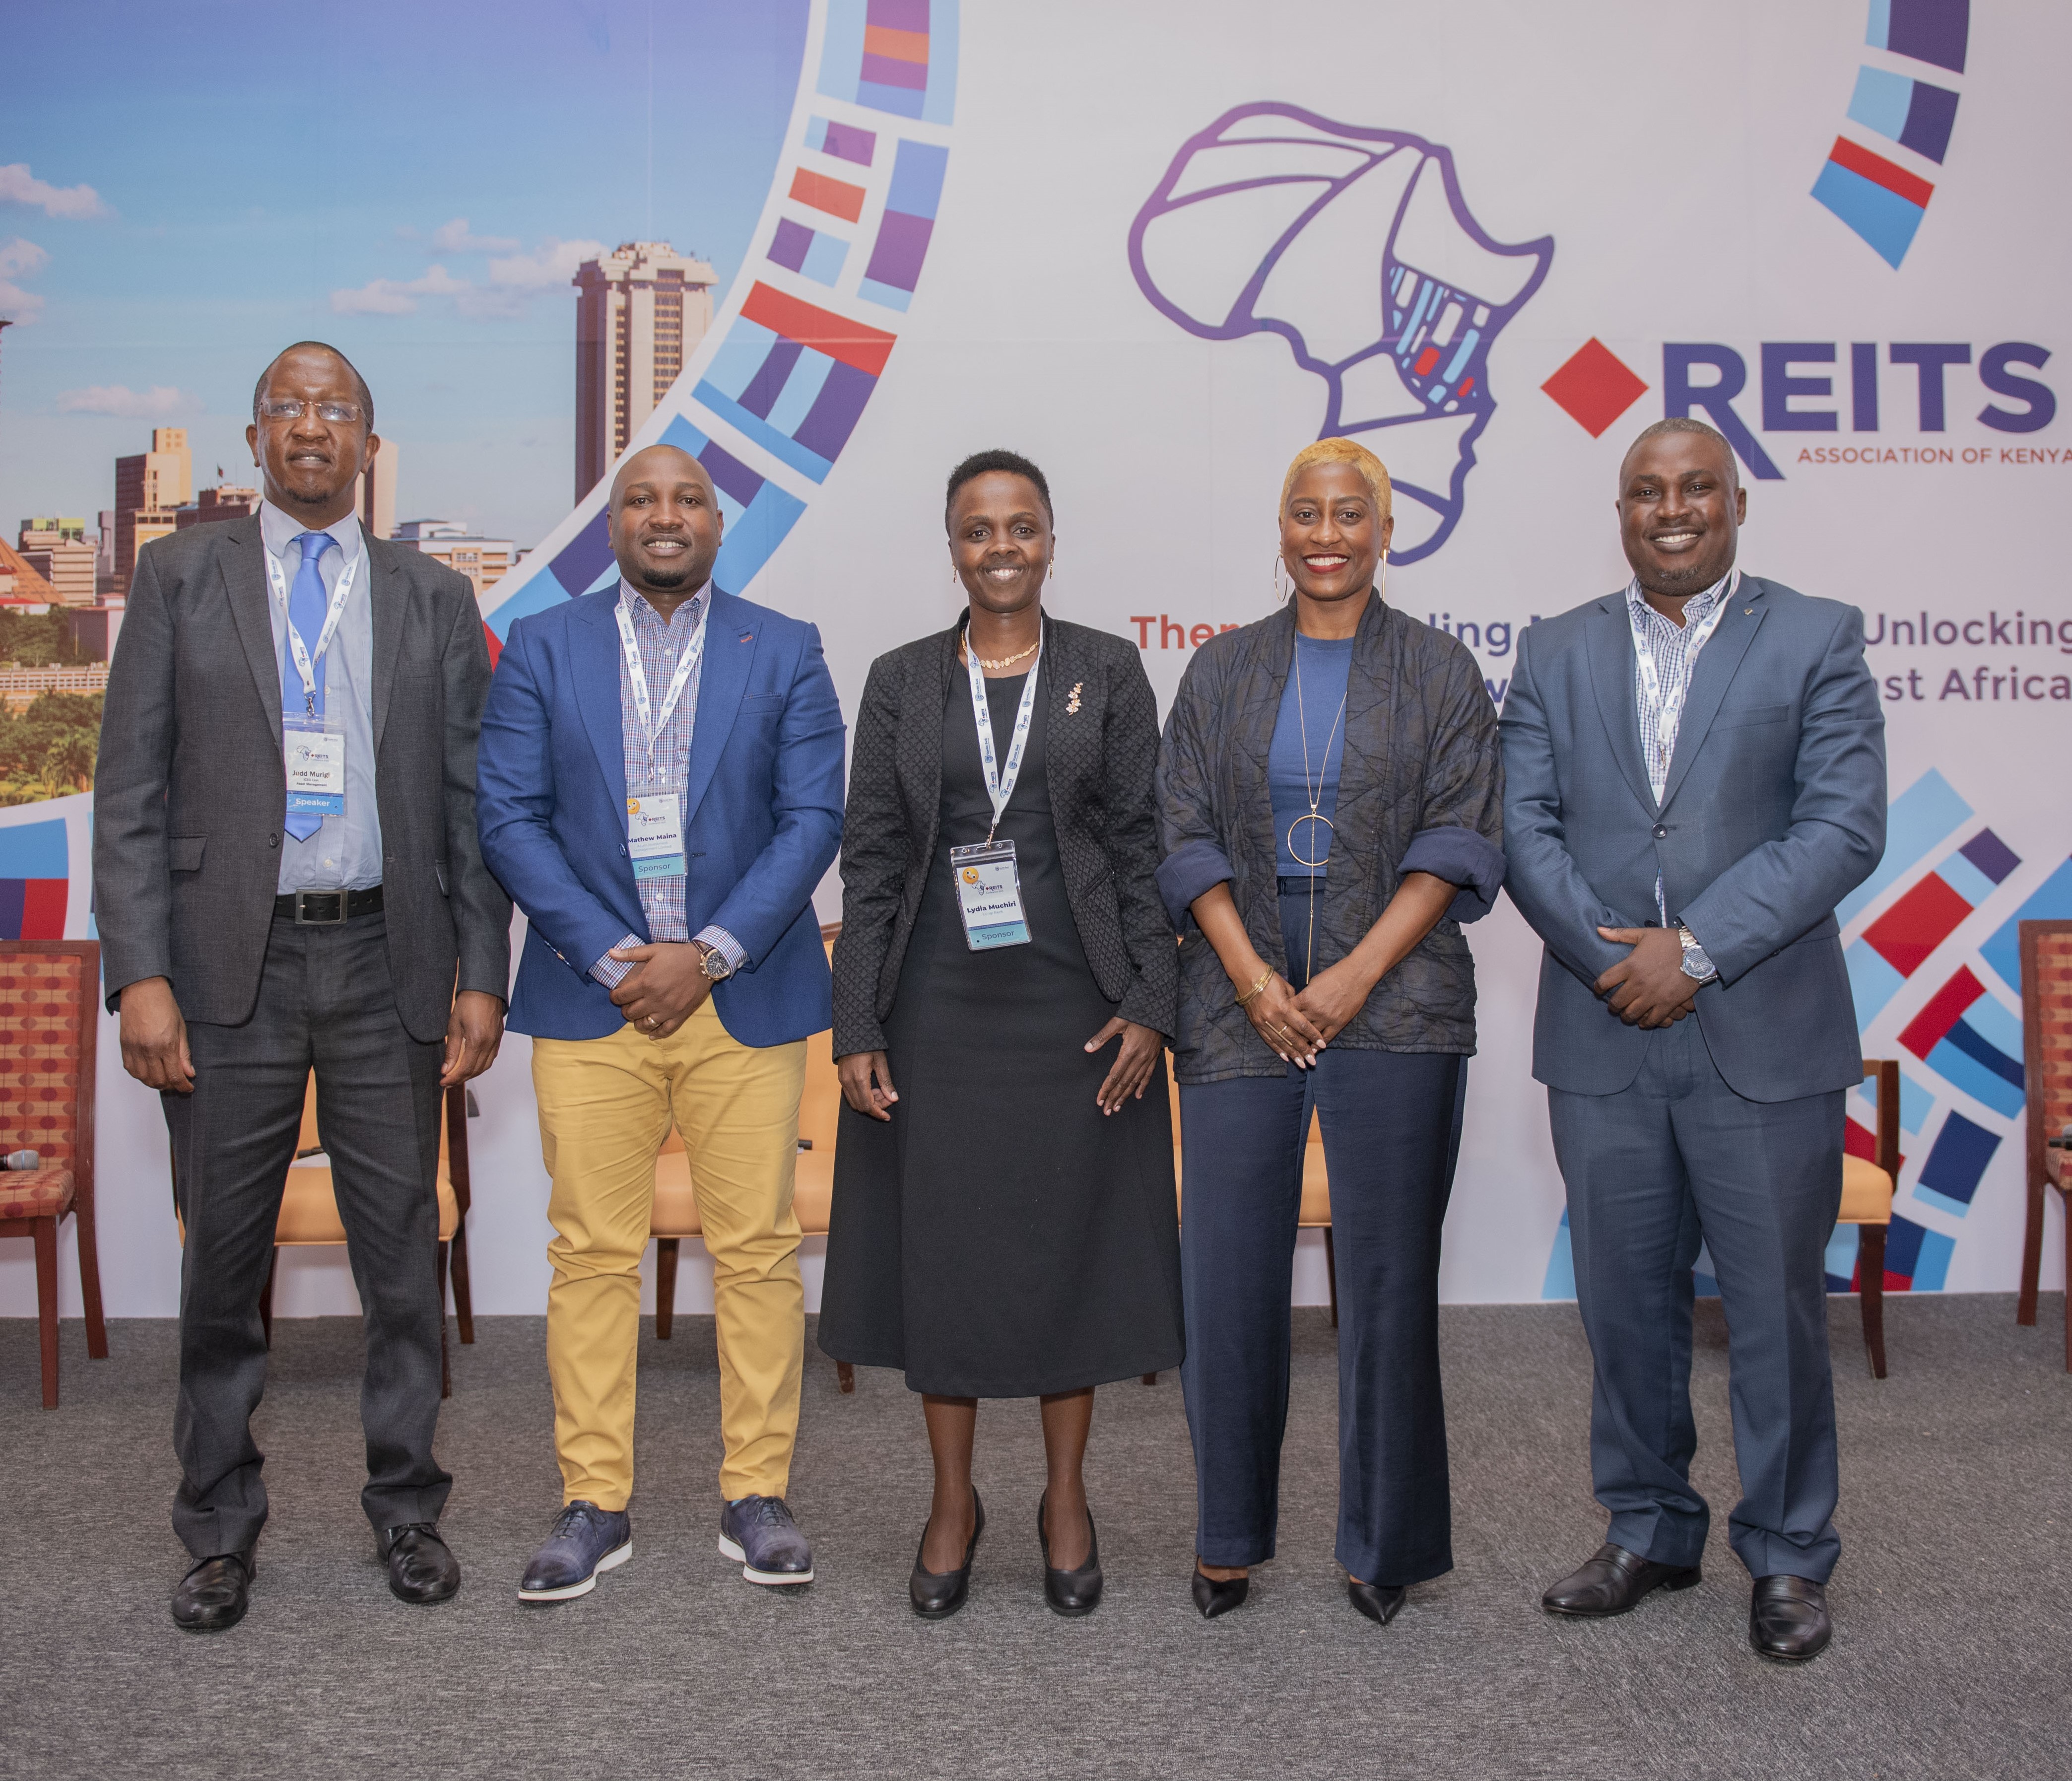 REITs Association of Kenya conference panel